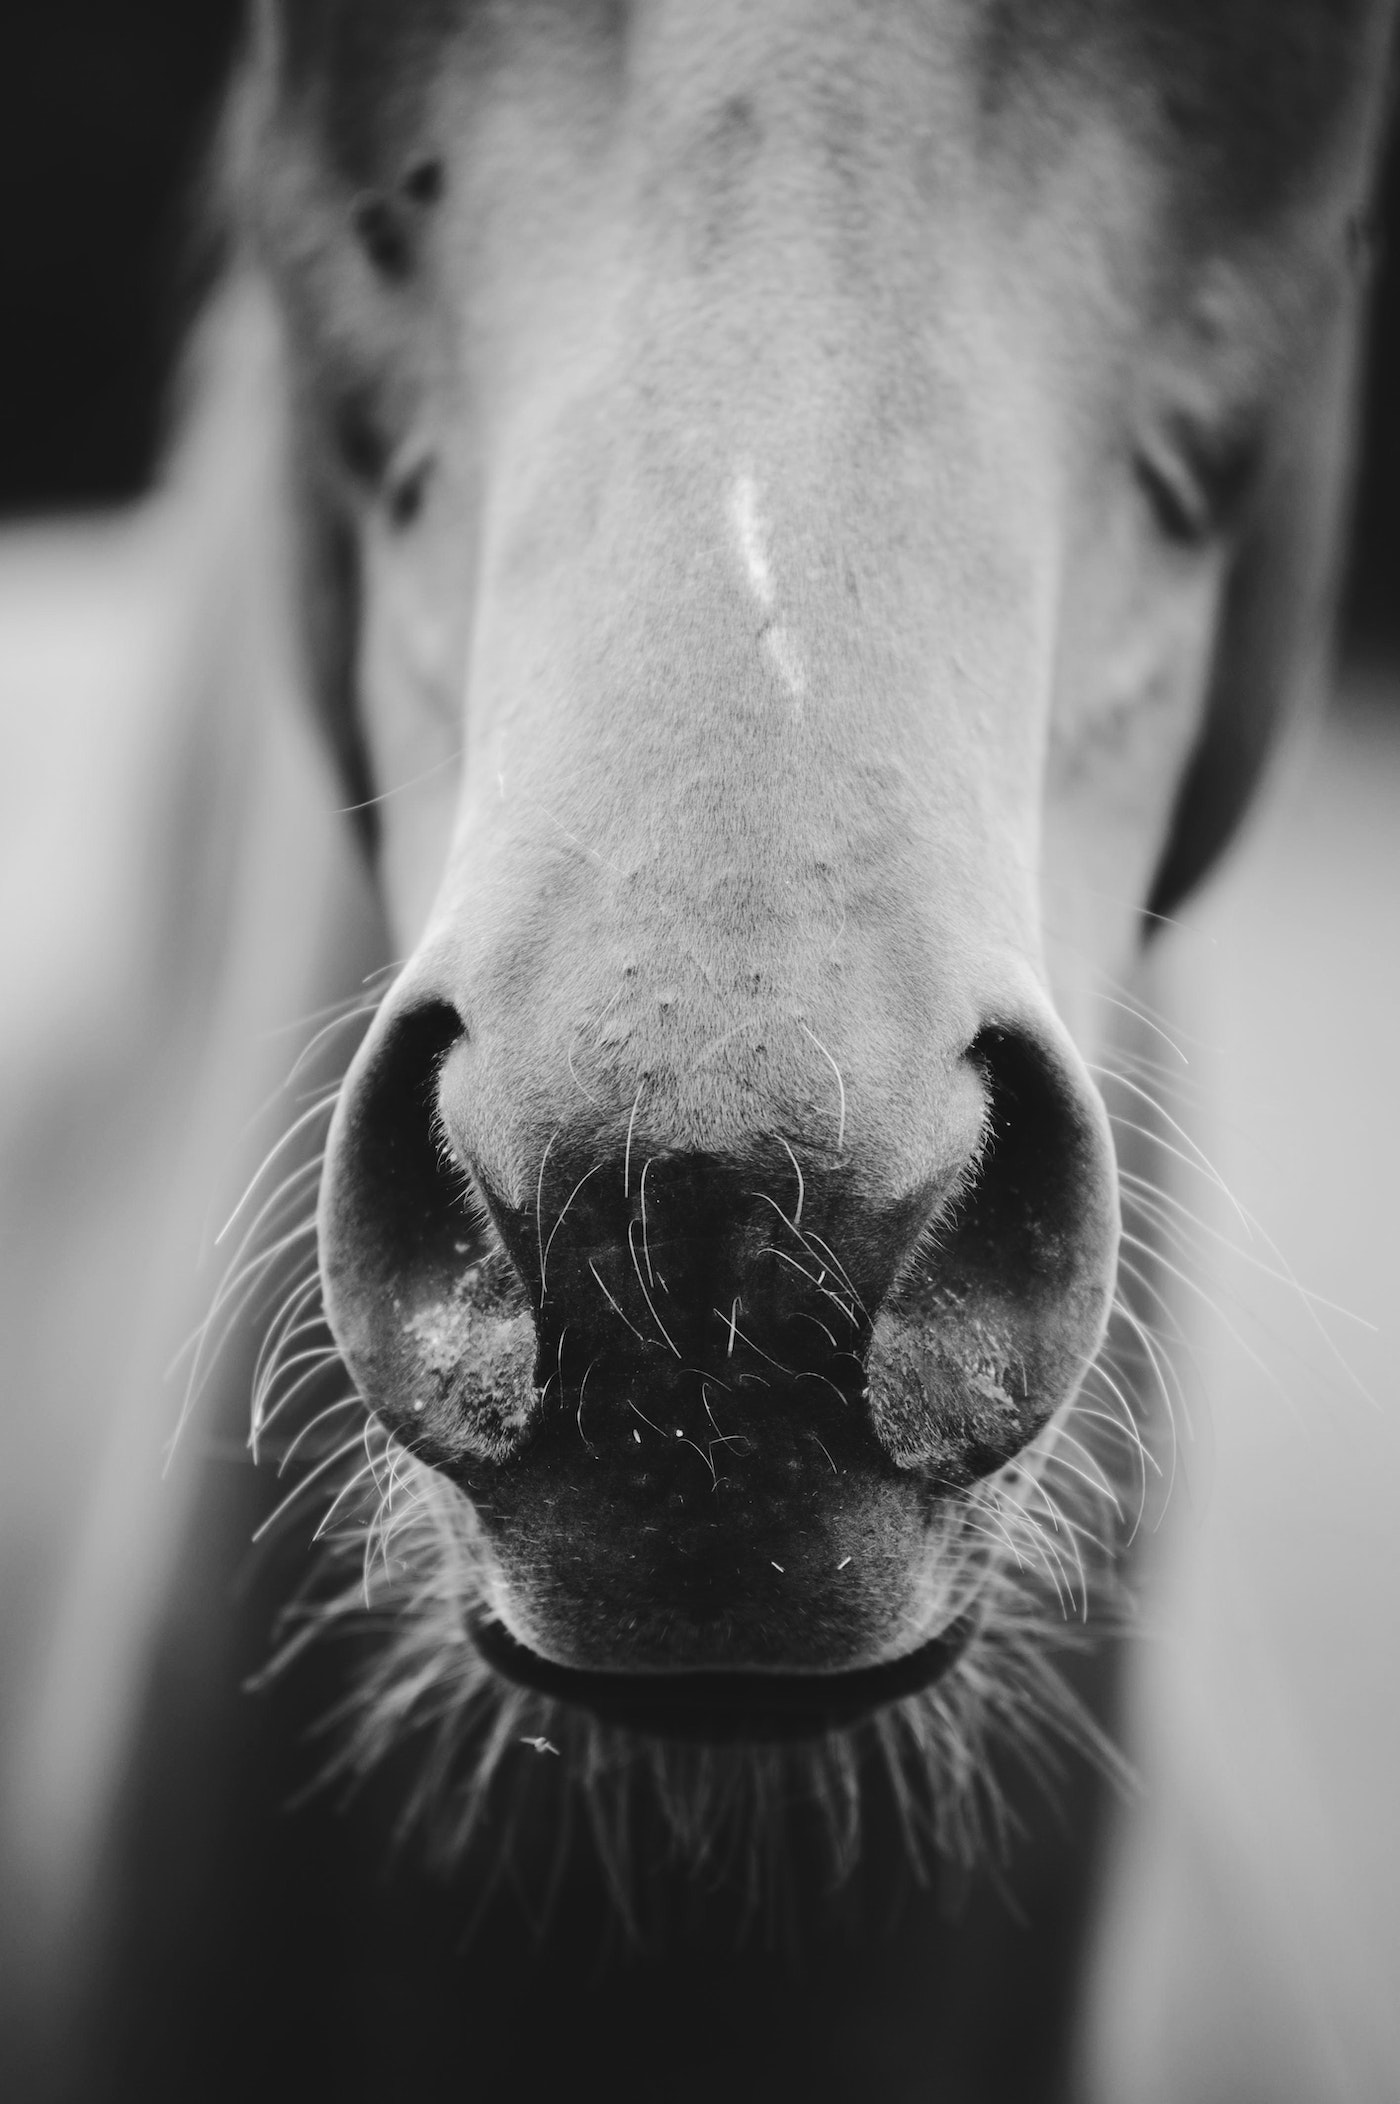 Horse Up Close